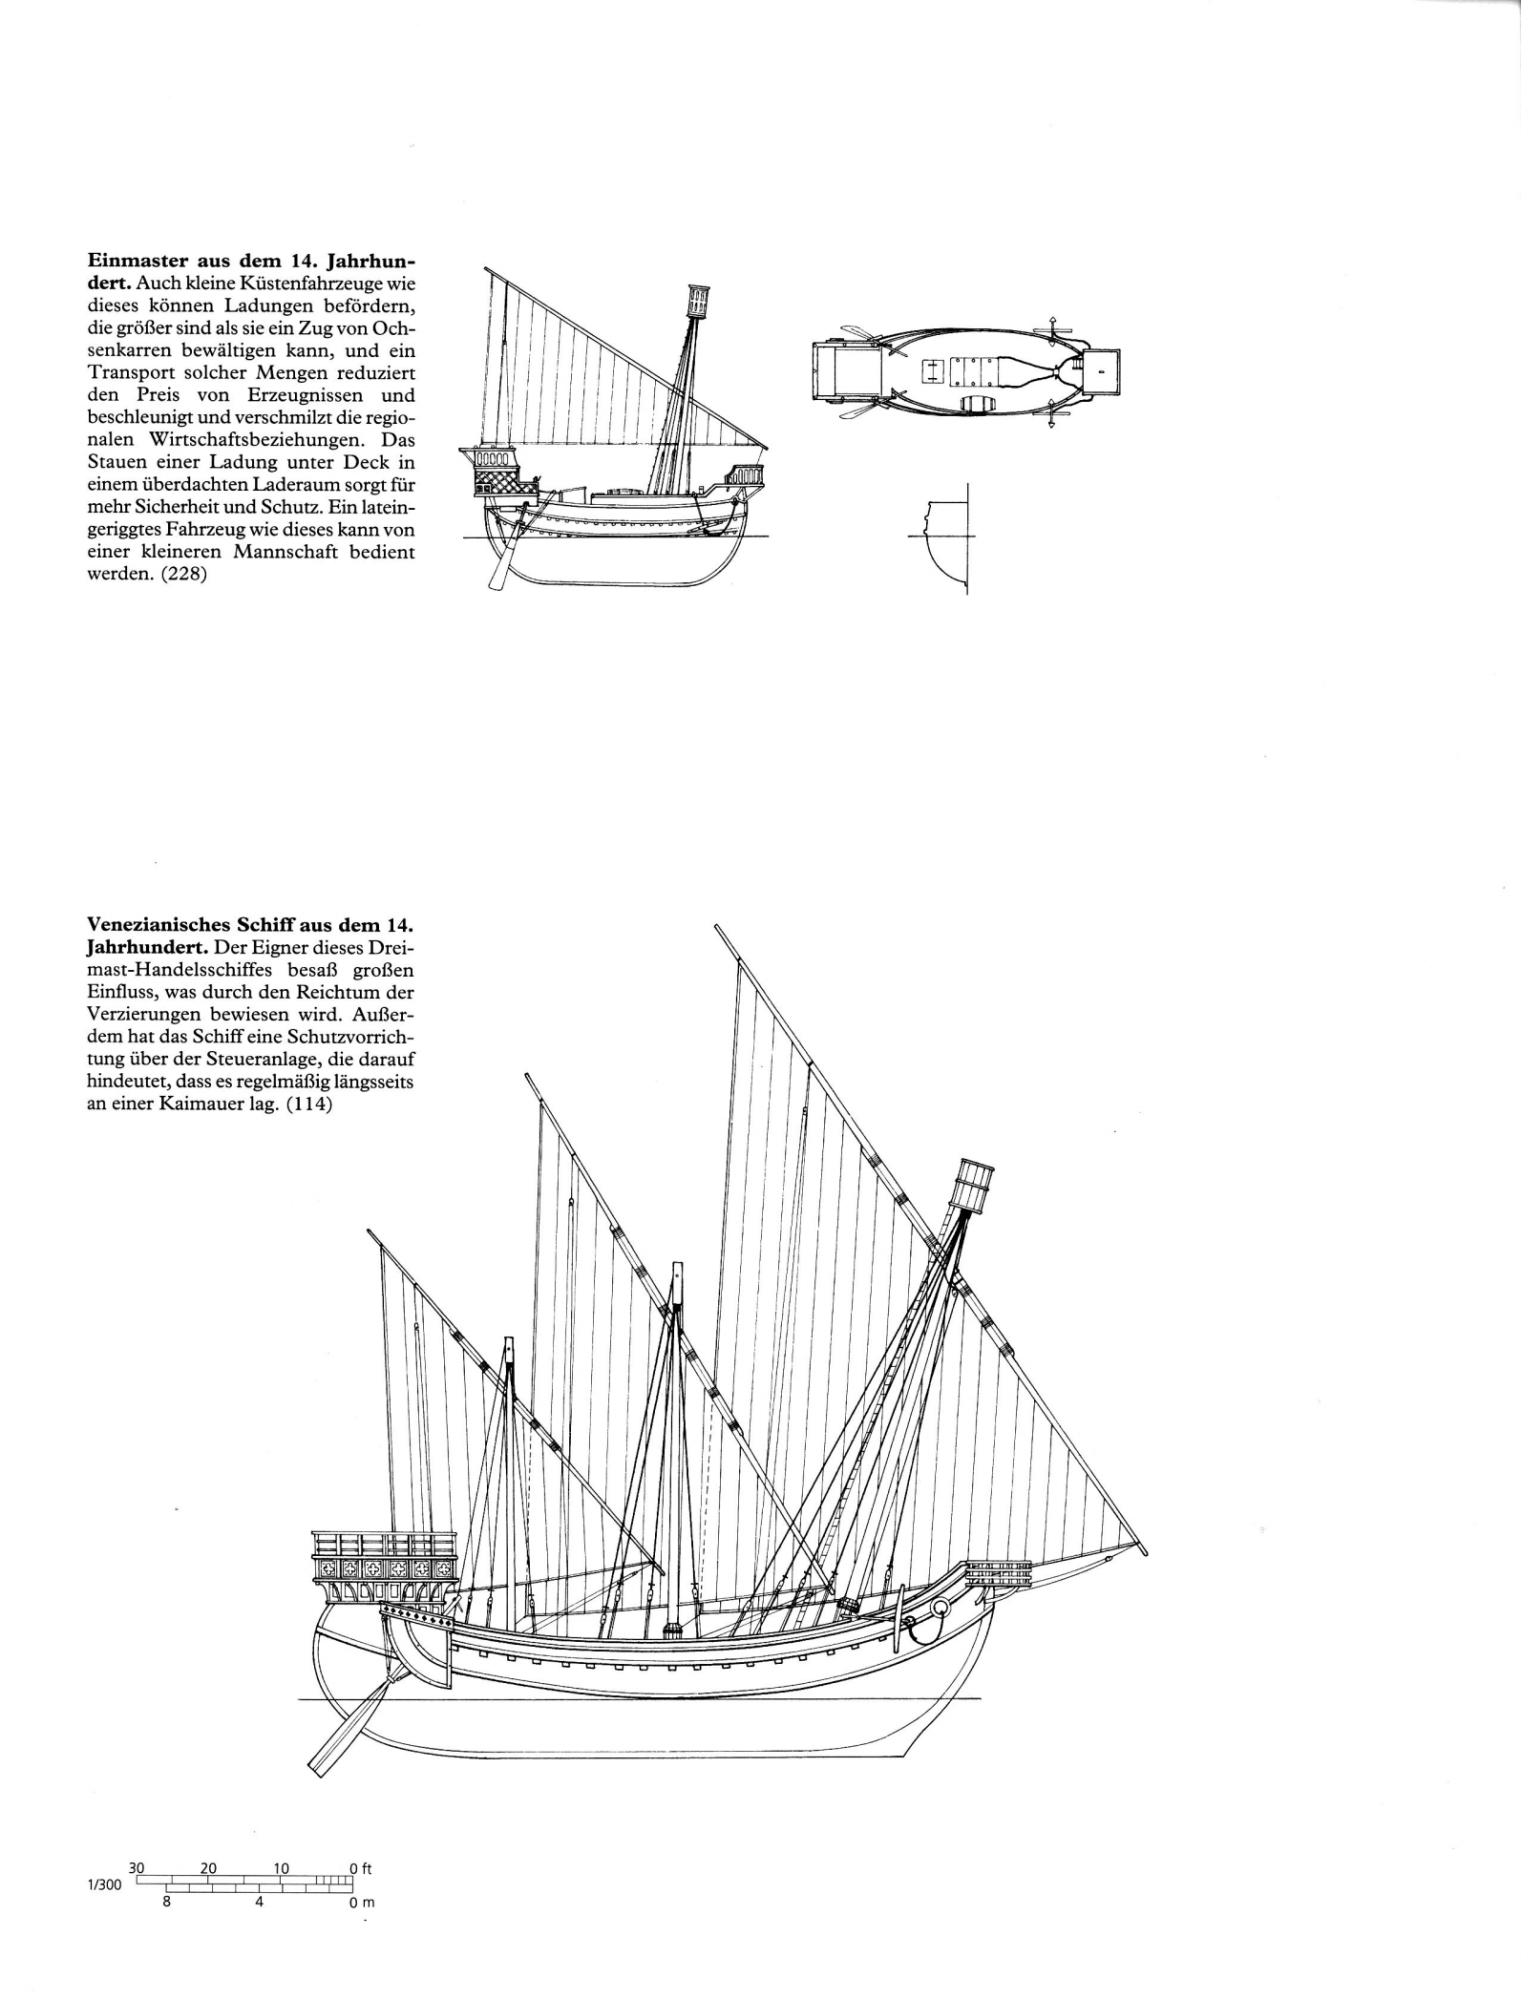 The Pirate War 1402–1404 Part III